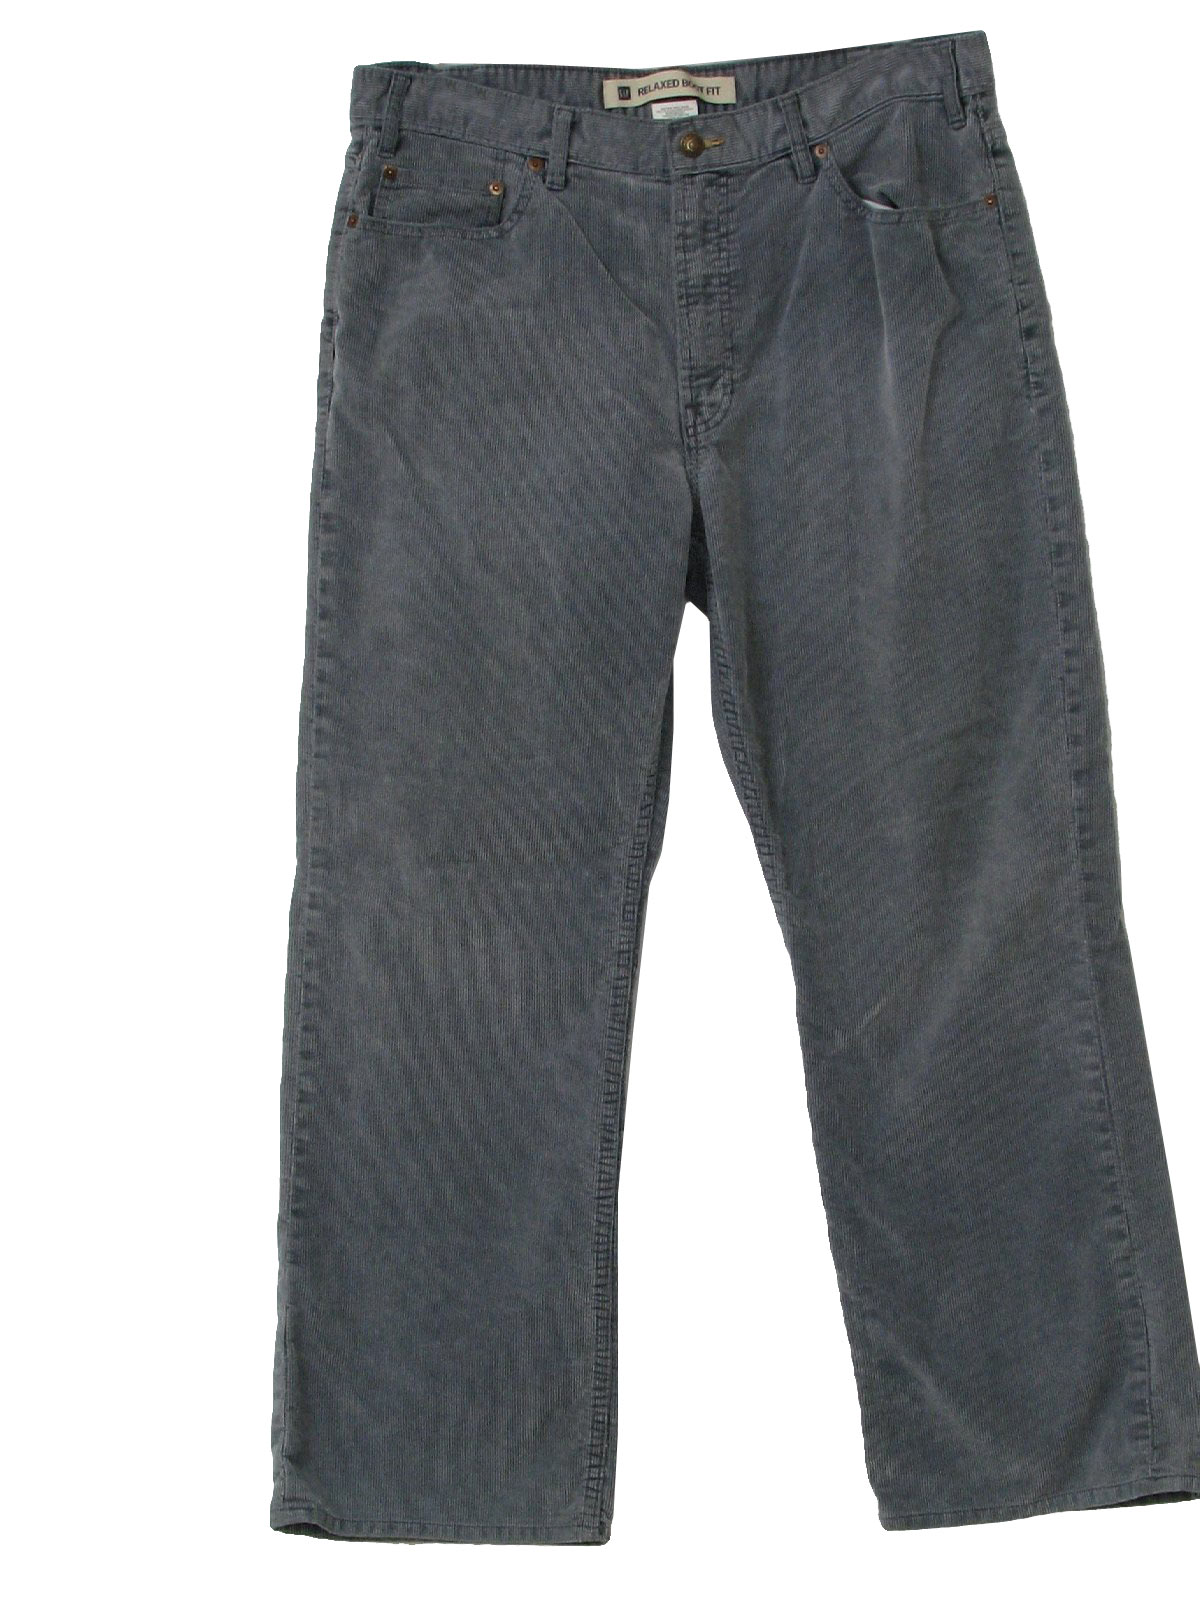 Retro 1990's Flared Pants / Flares (Gap) : 90s -Gap- Mens gray stone ...